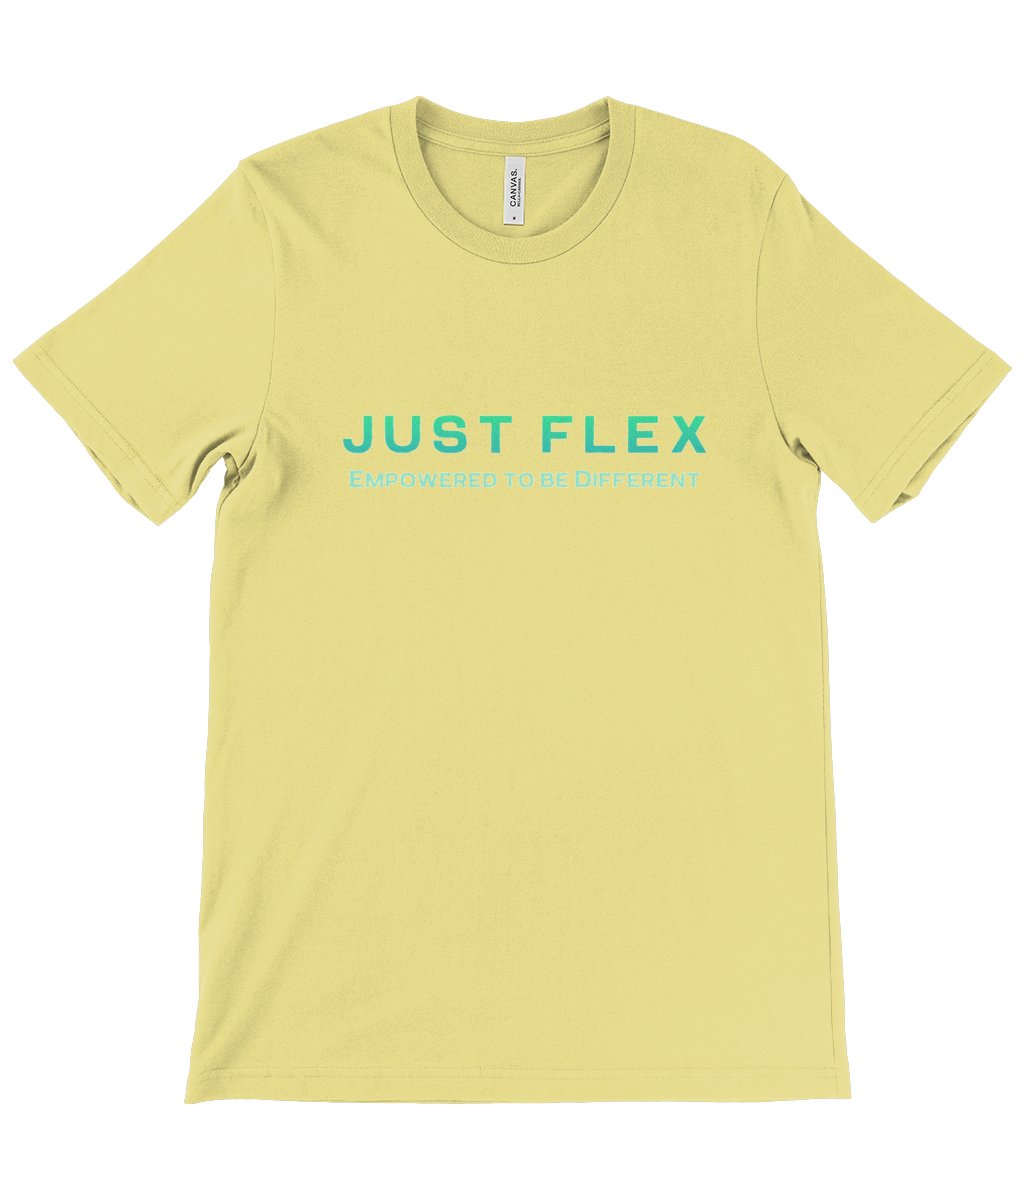 Just Flex - Empowered To Be Different Unisex Crew Neck T - Shirt - Just Flex